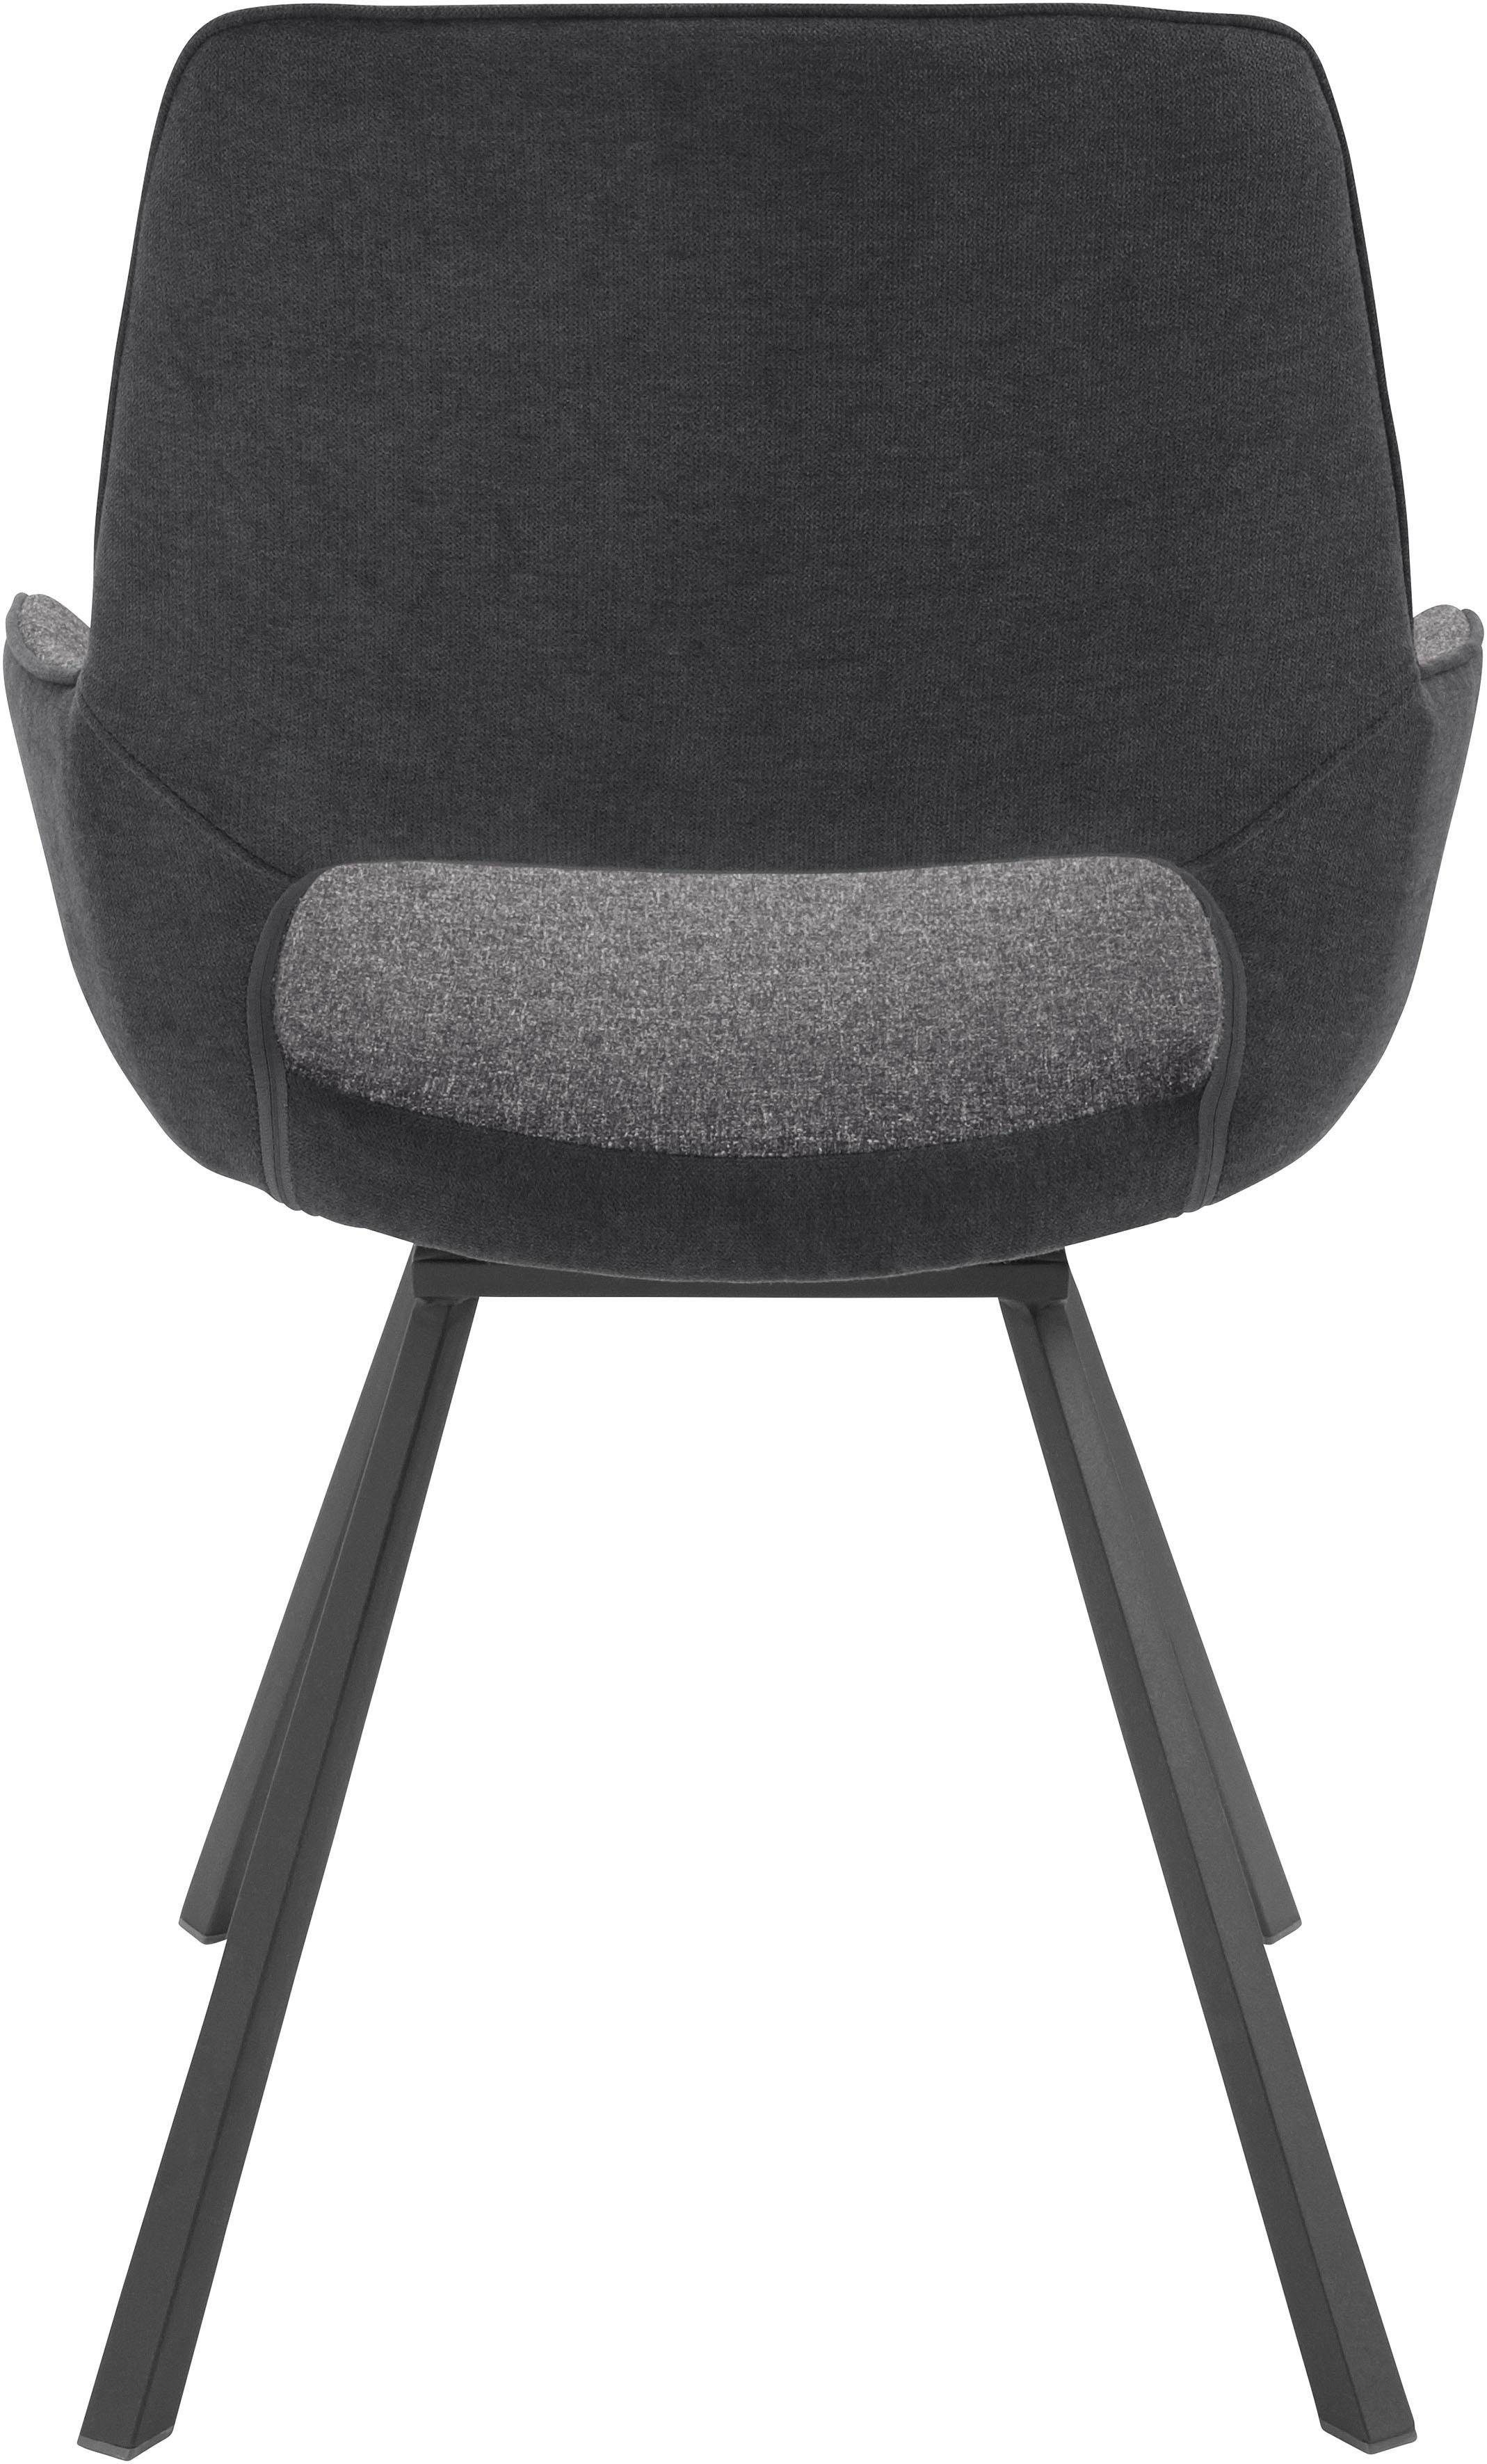 120 charcoal charcoal 4-Fußstuhl furniture Kg St), (Set, | Parana 2 Stuhl MCA belastbar bis